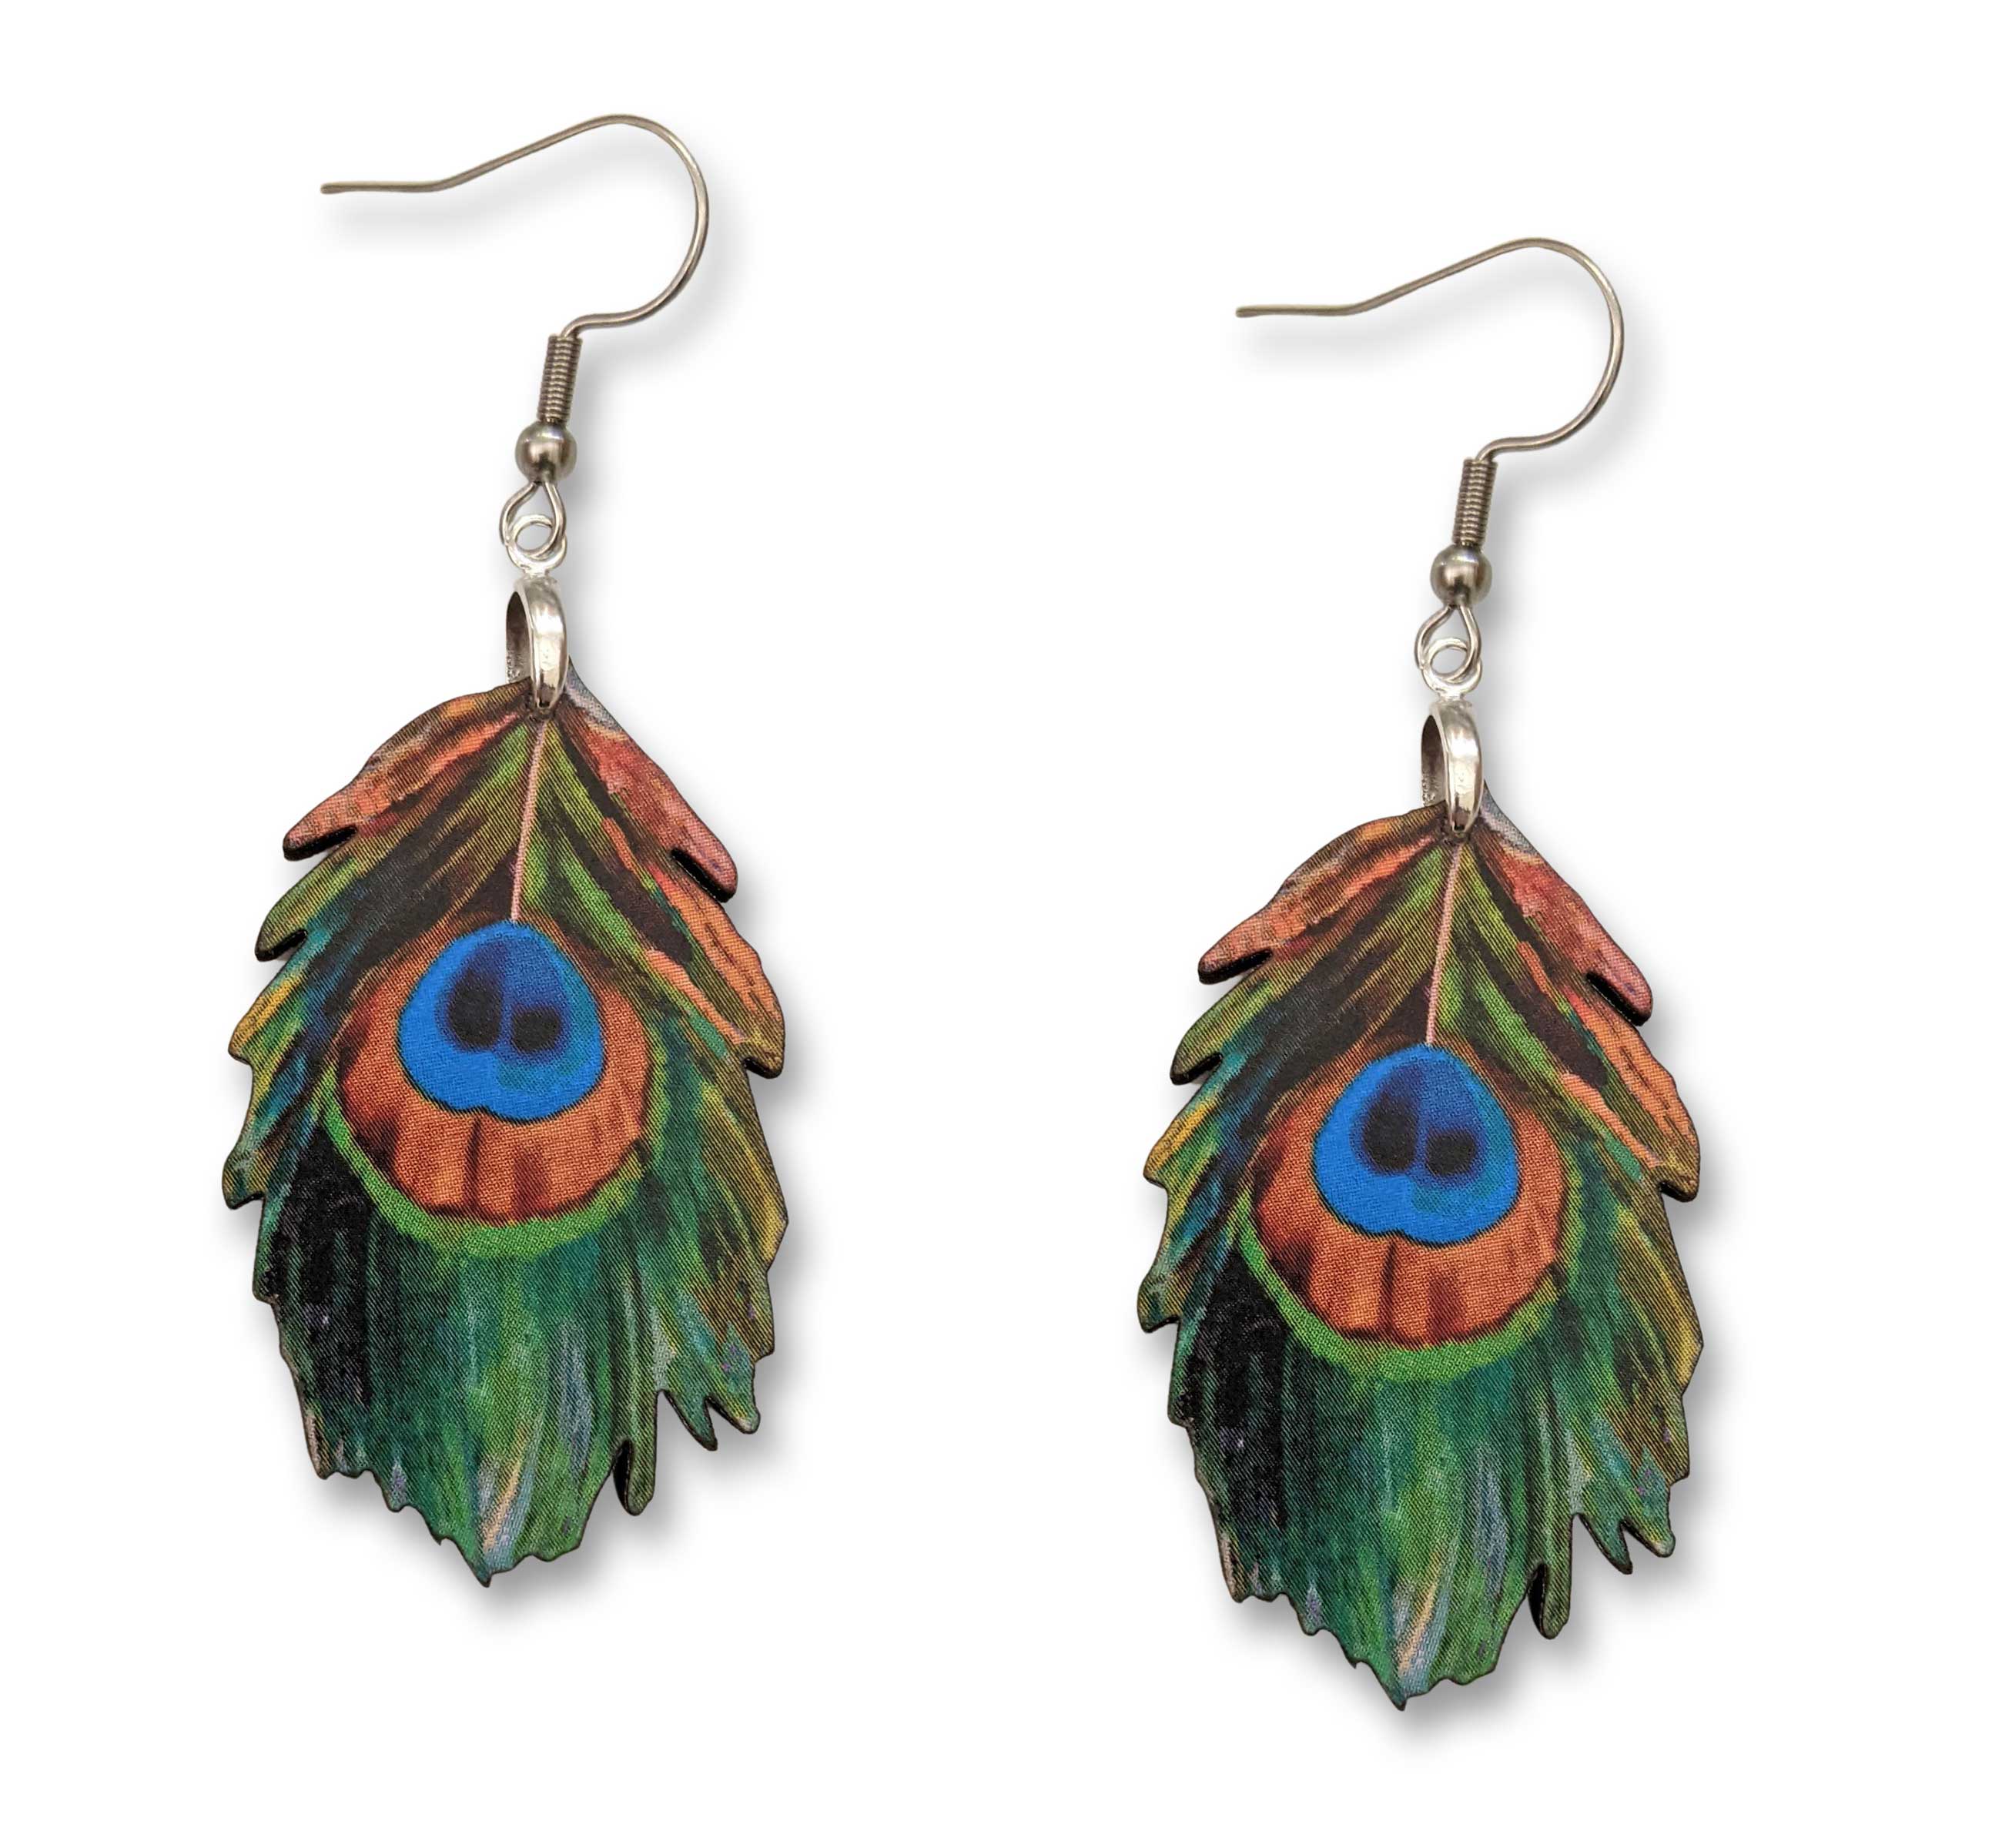 "Aveline" Peacock Earrings